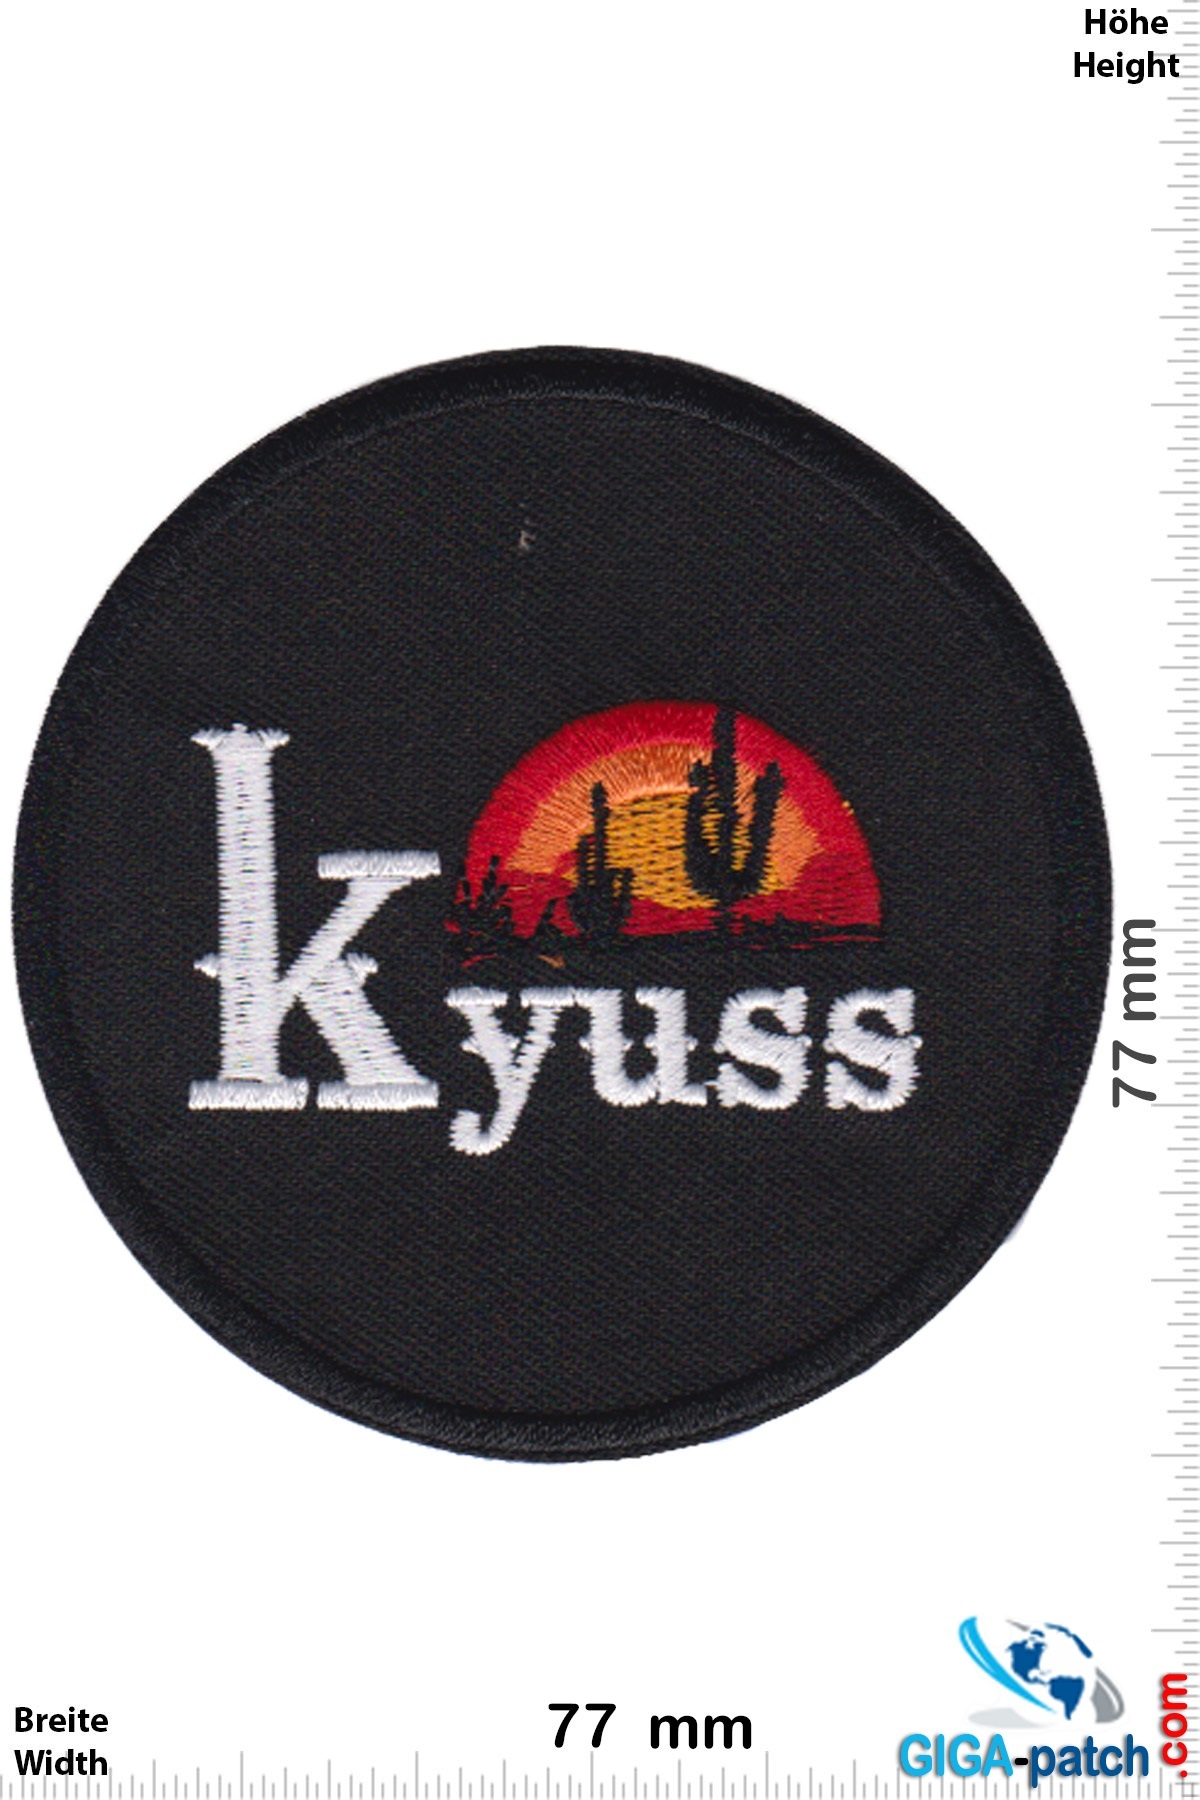 Kyuss Kyuss - Alternative Metal - round